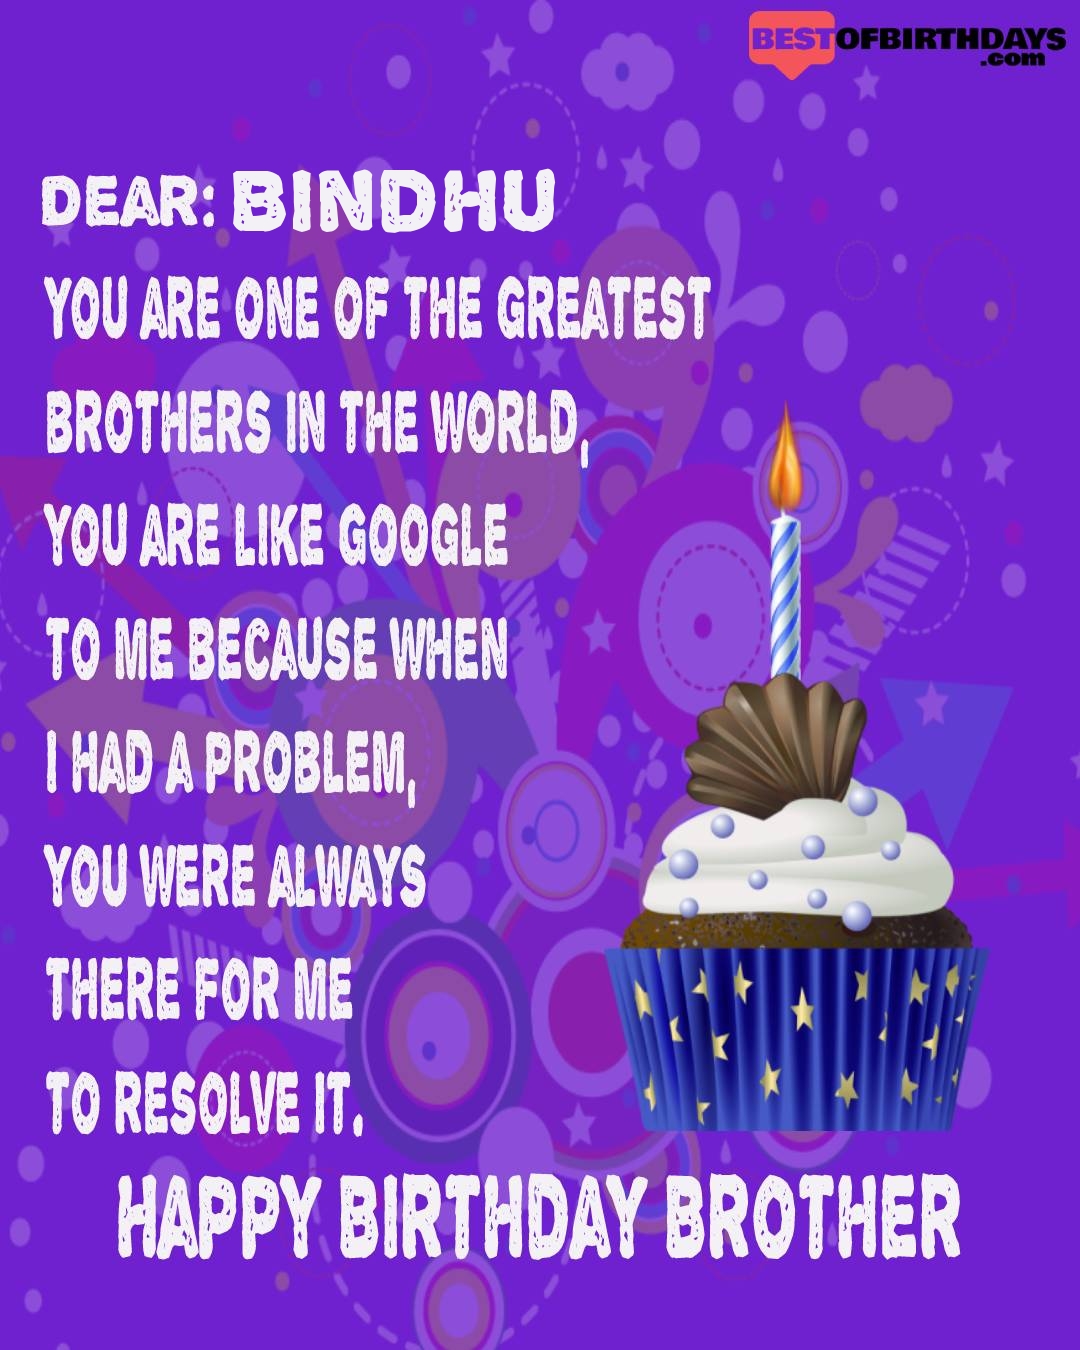 Happy birthday bindhu bhai brother bro